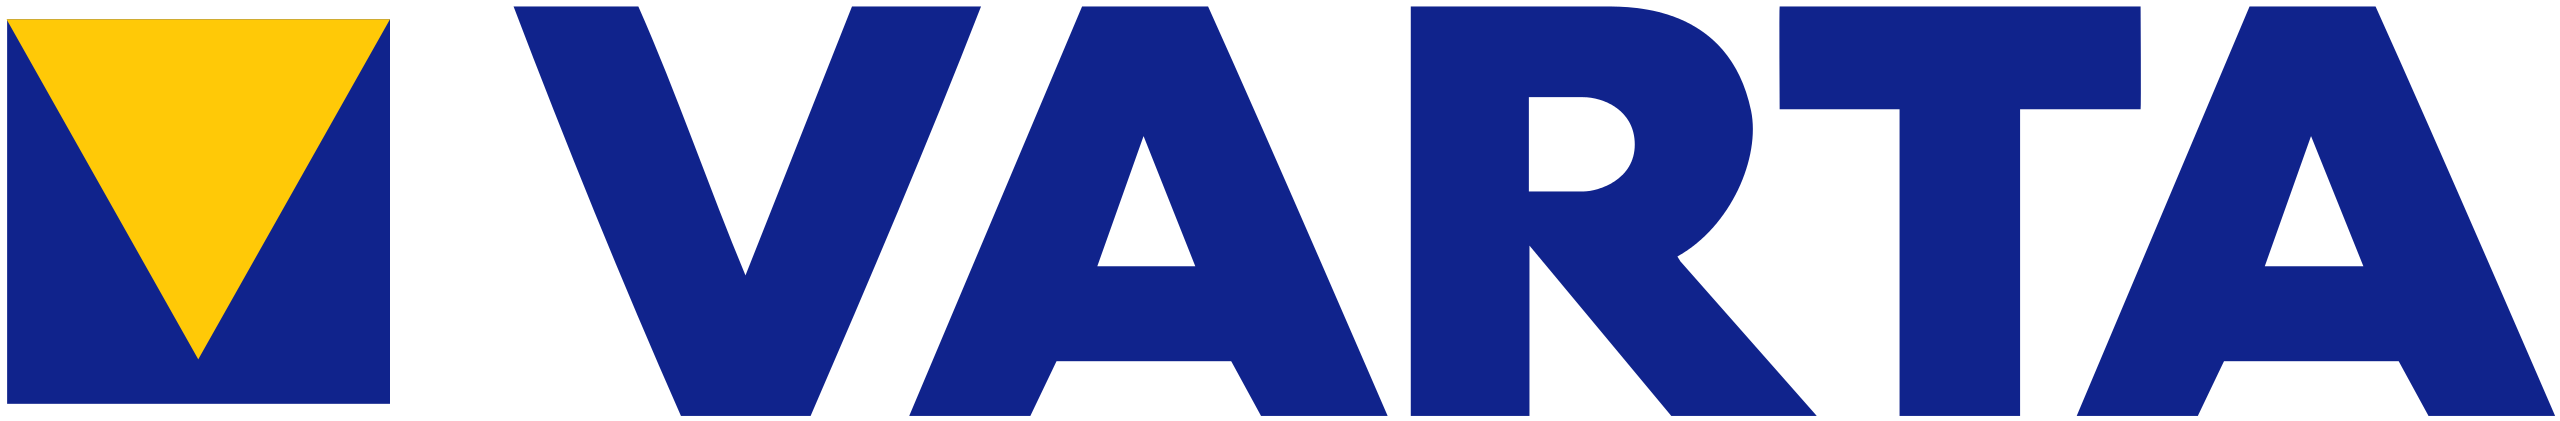 Varta Brand Logo